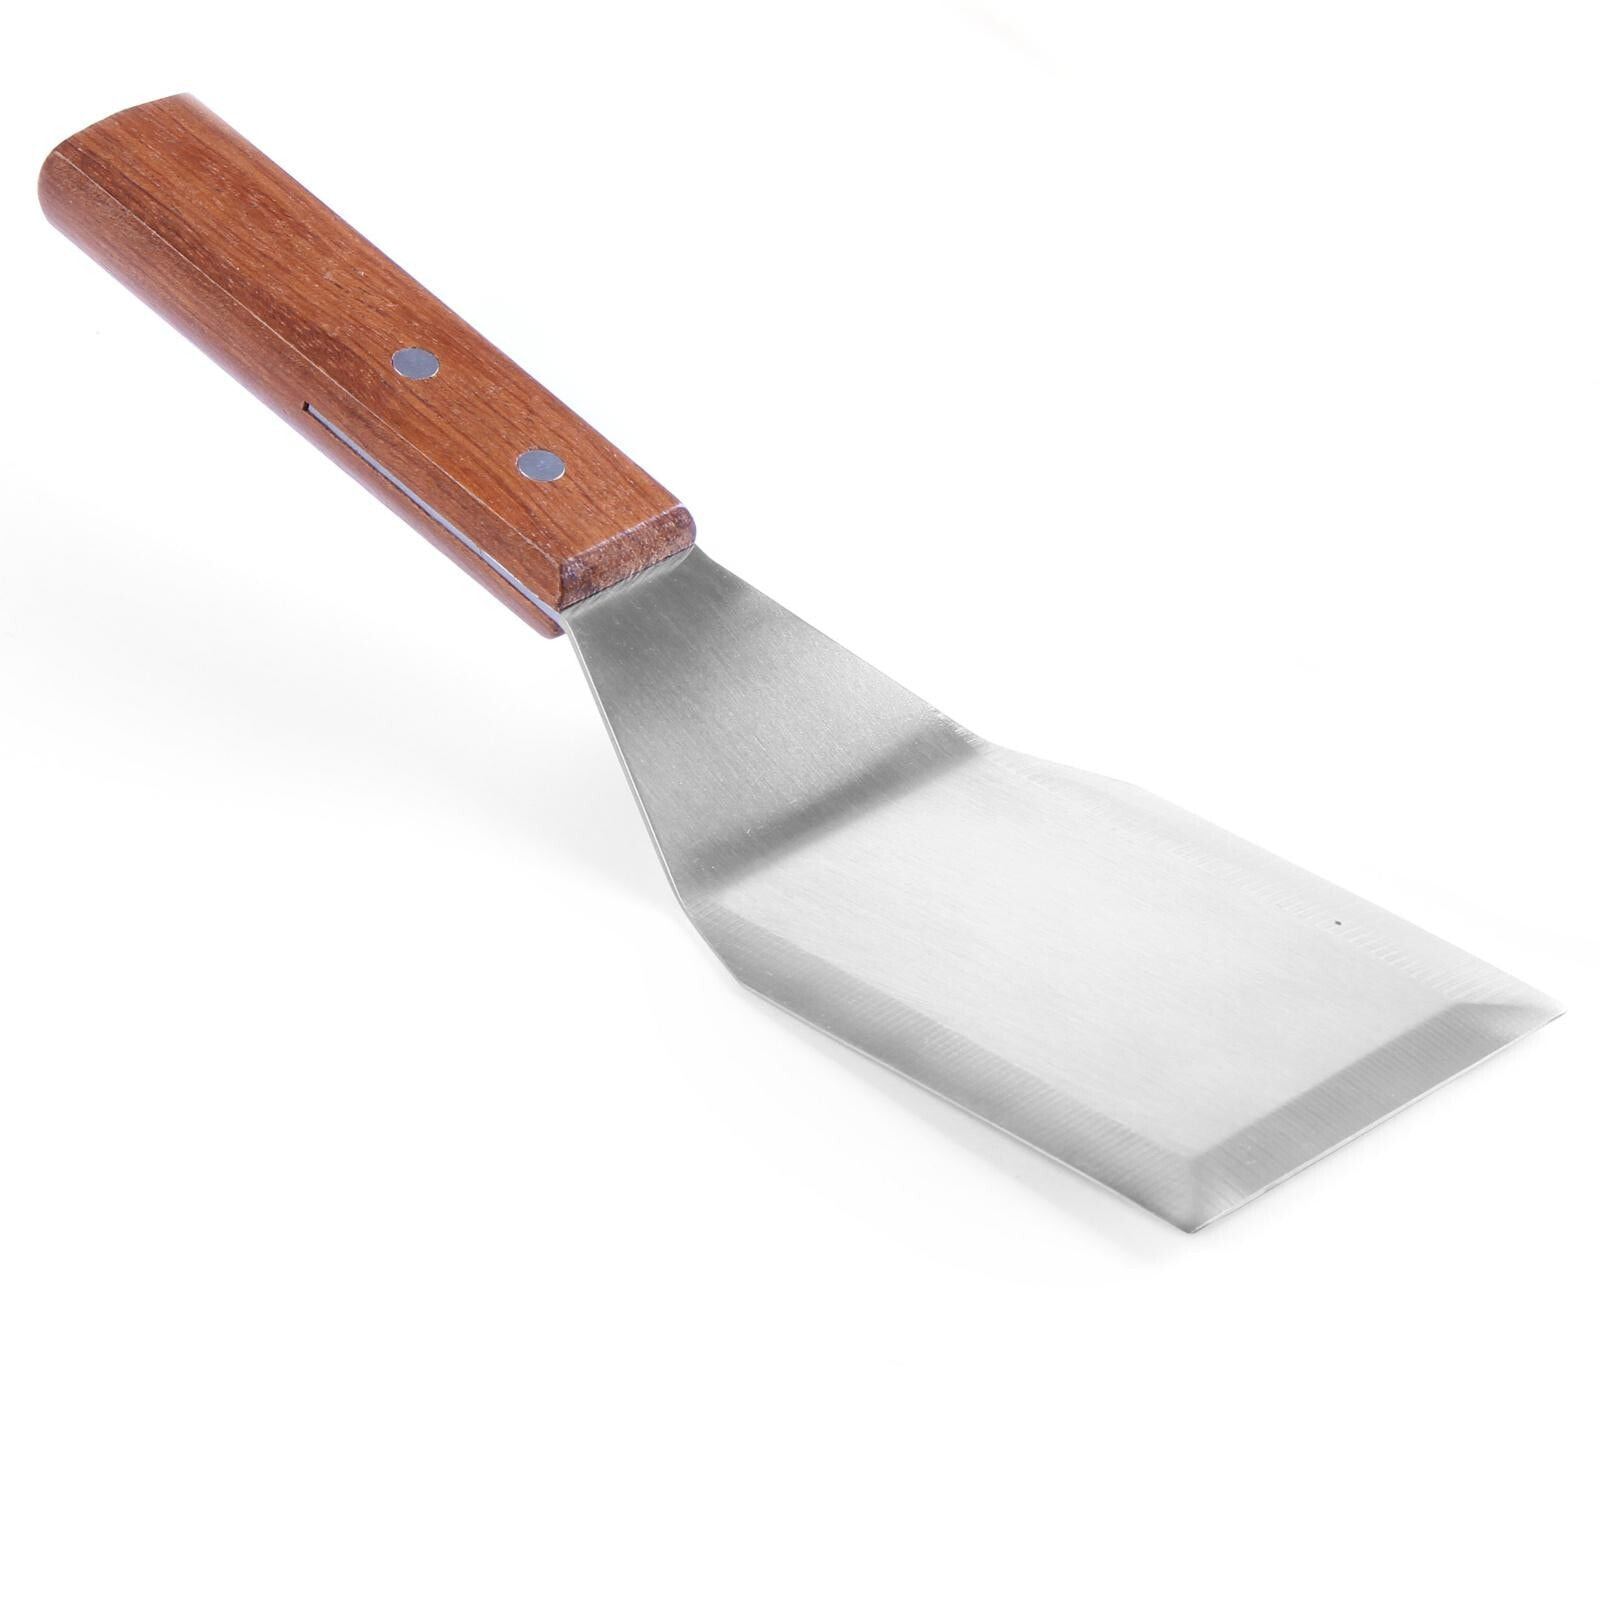 Angular grill spatula for steaks 280 mm - Hendi 855508